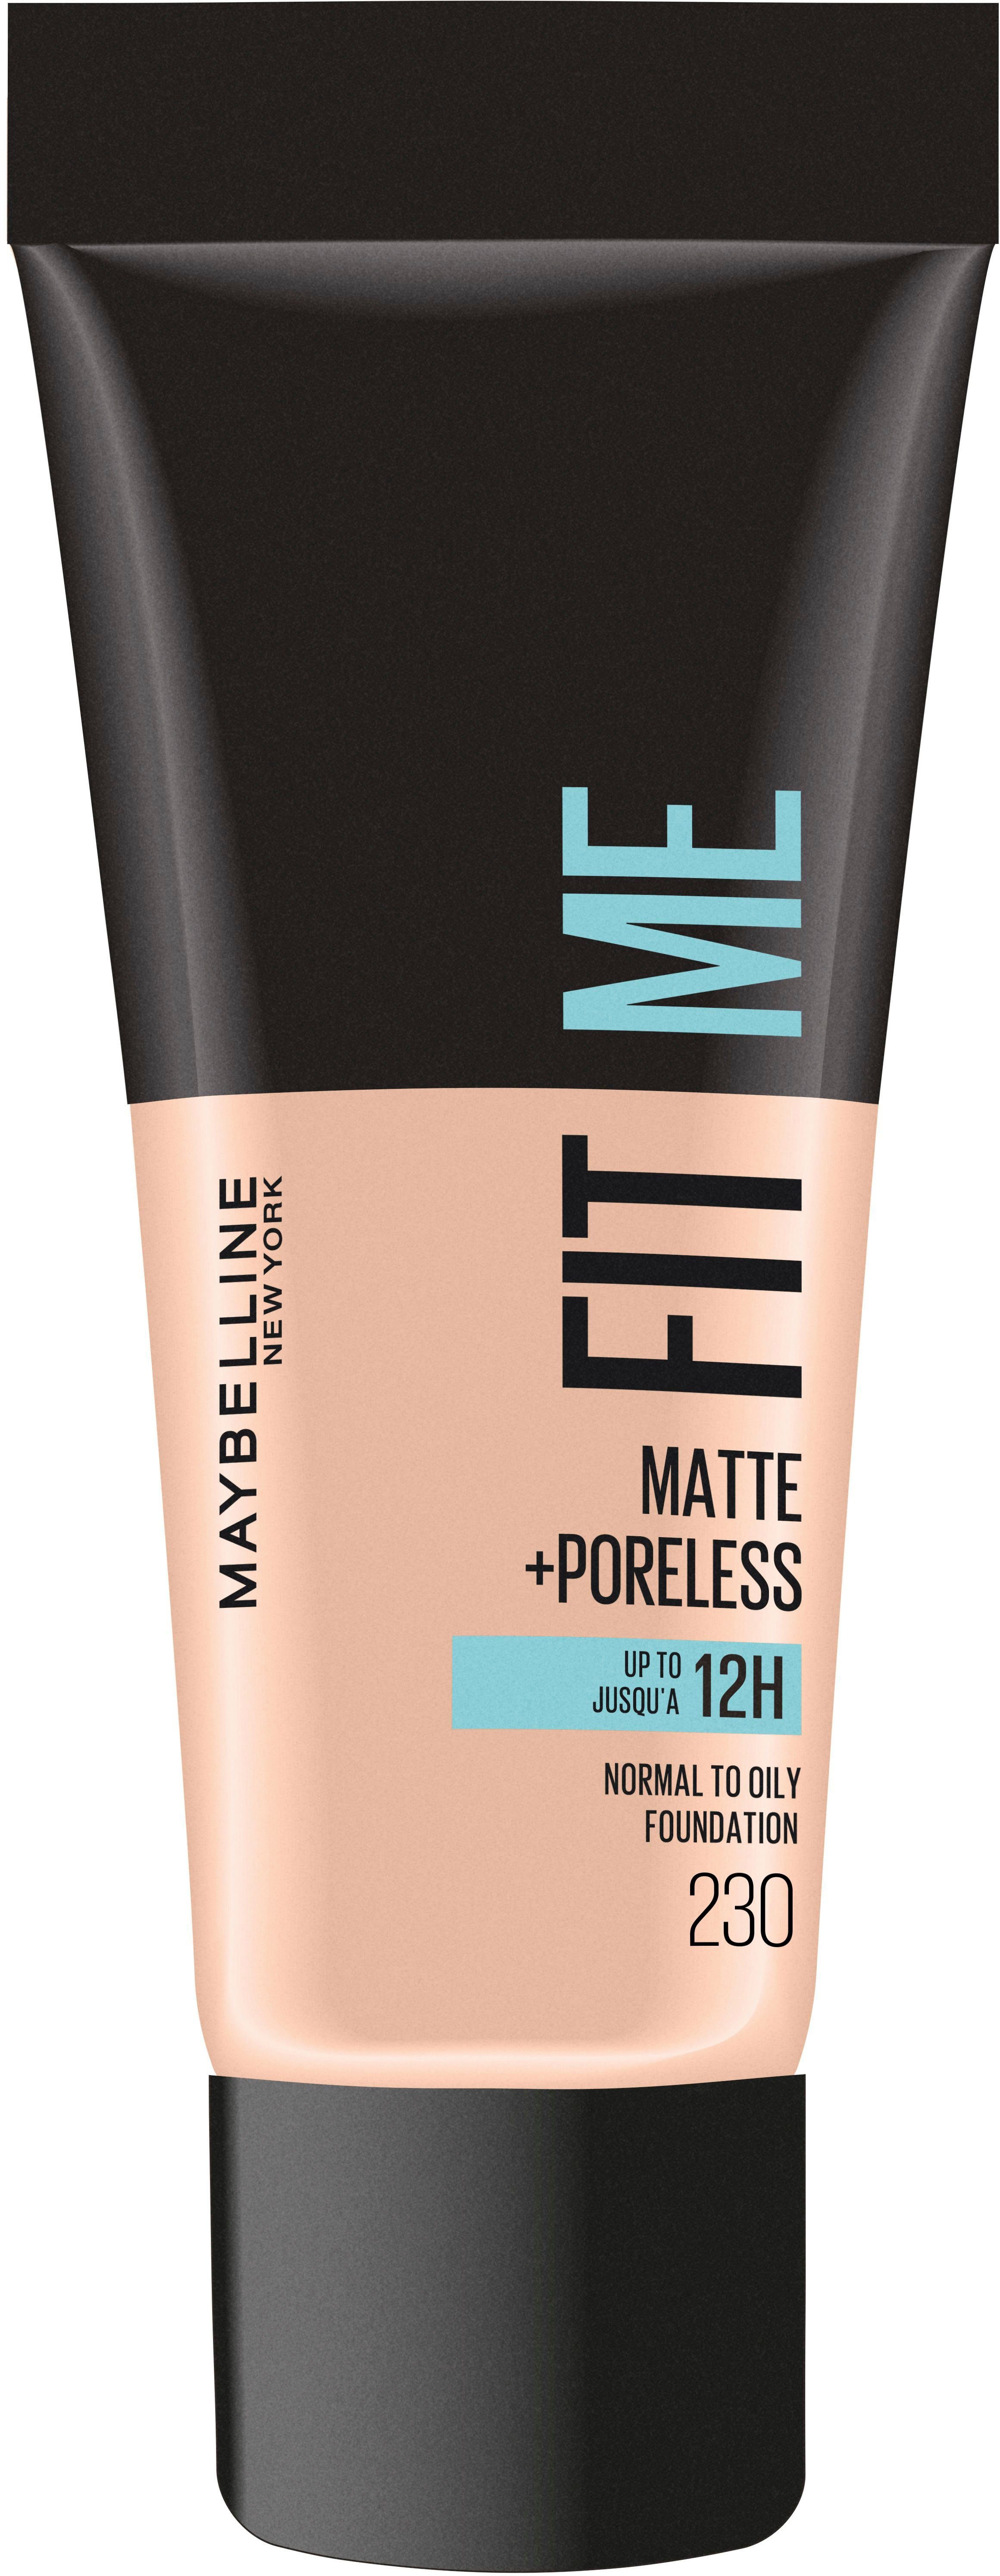 MAYBELLINE NEW YORK Foundation Poreless Maybelline Make-Up + New Fit Me! York Matte